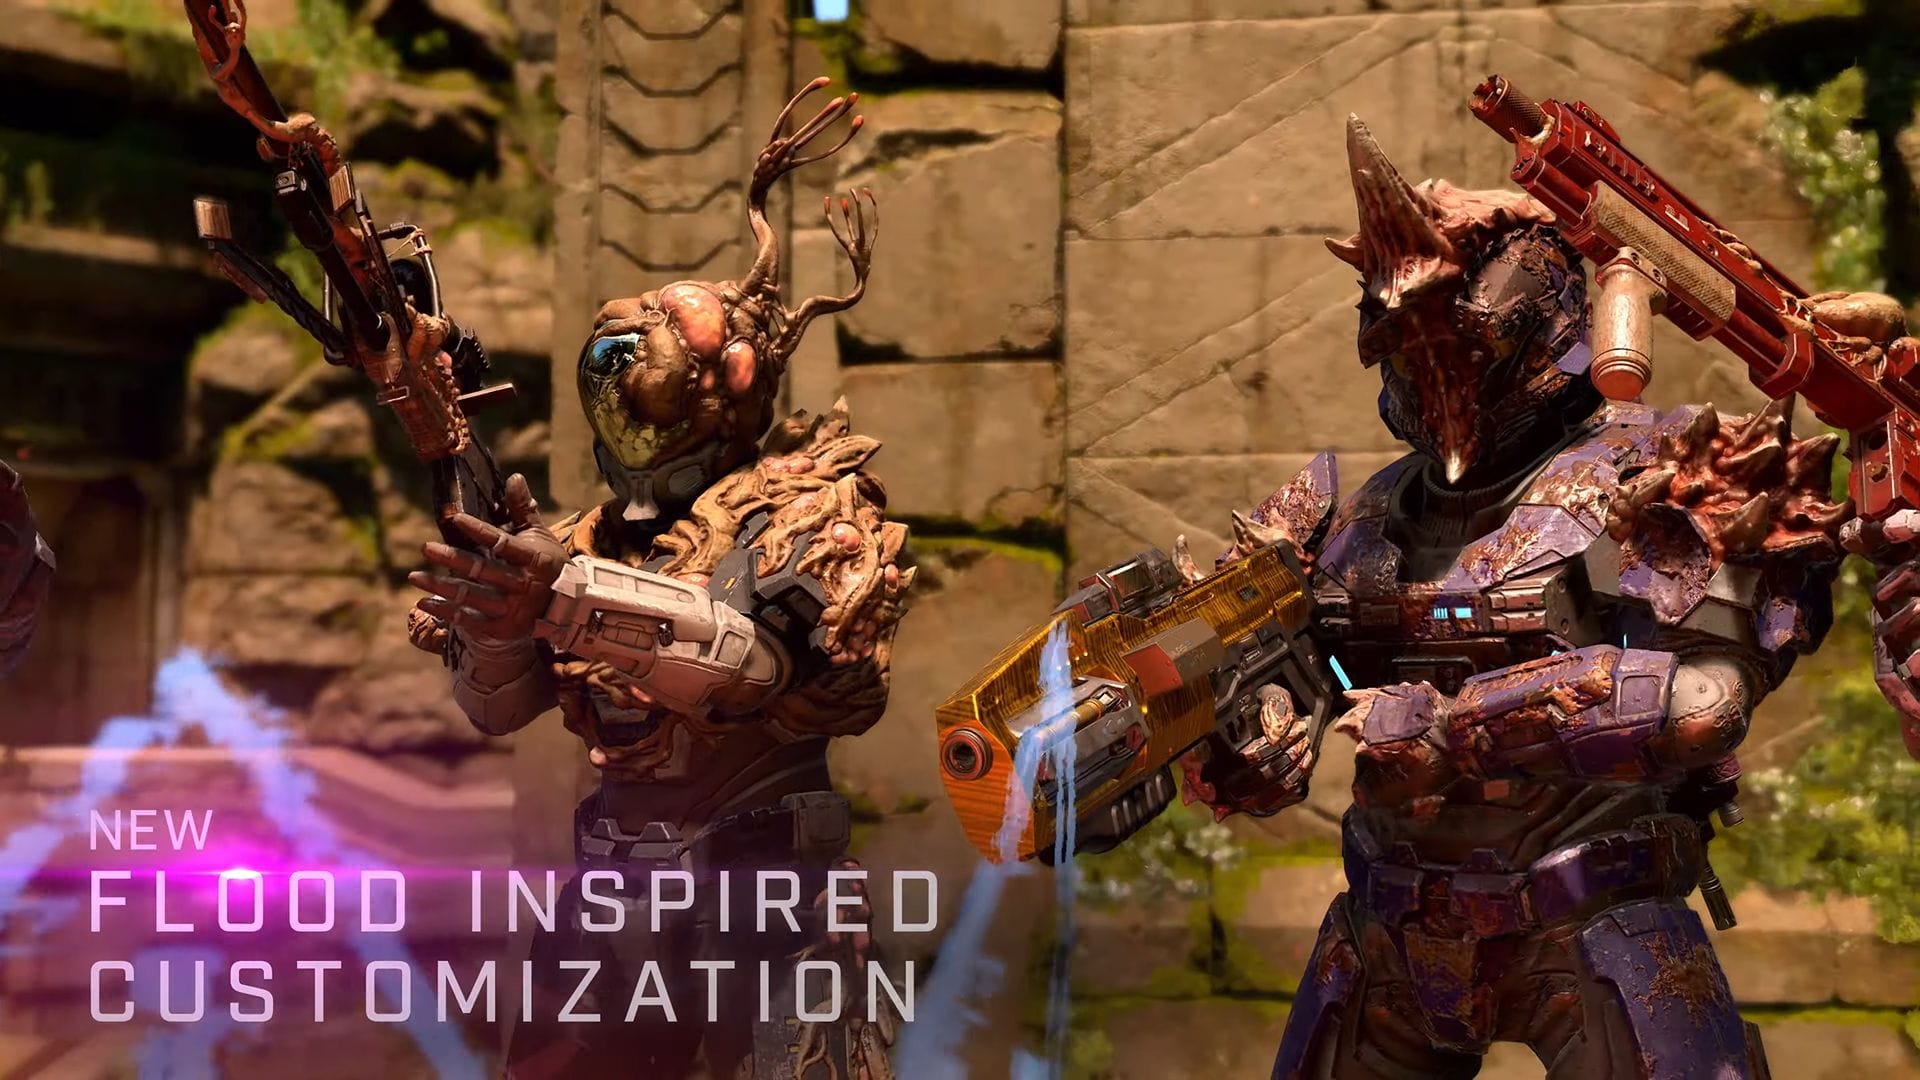 Halo Infinite Season 5 Brings Reimagined Extraction, Flood Armor, & More